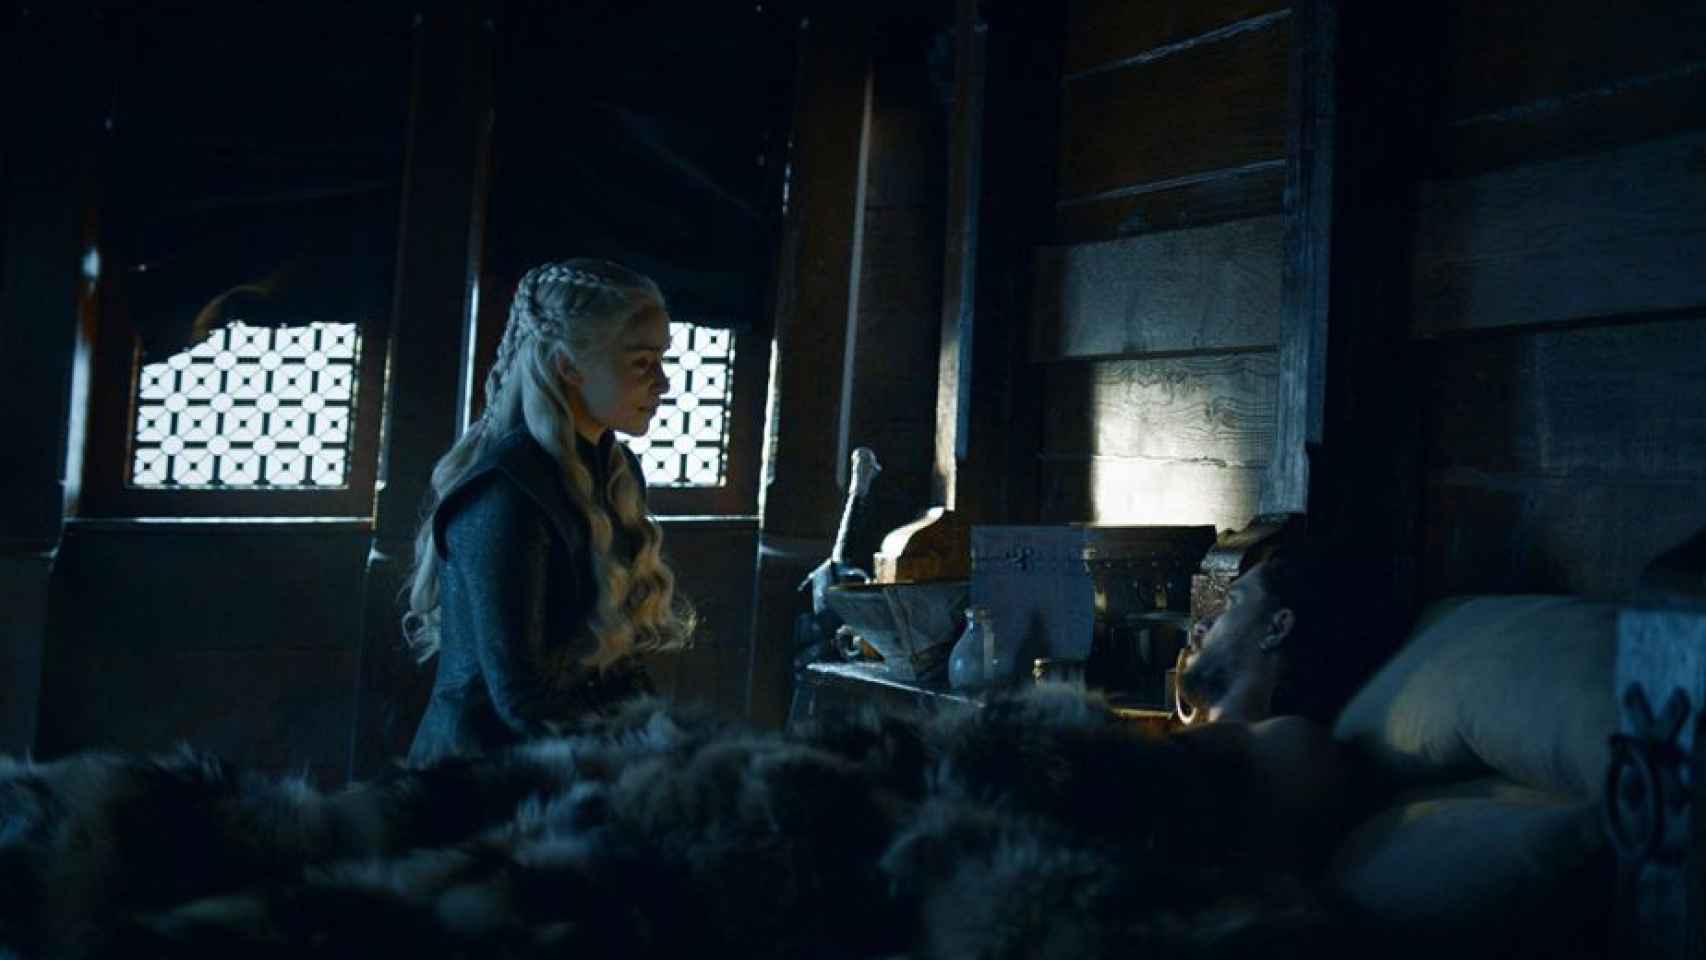 Comienza el flirteo entre Jon y Daenerys.